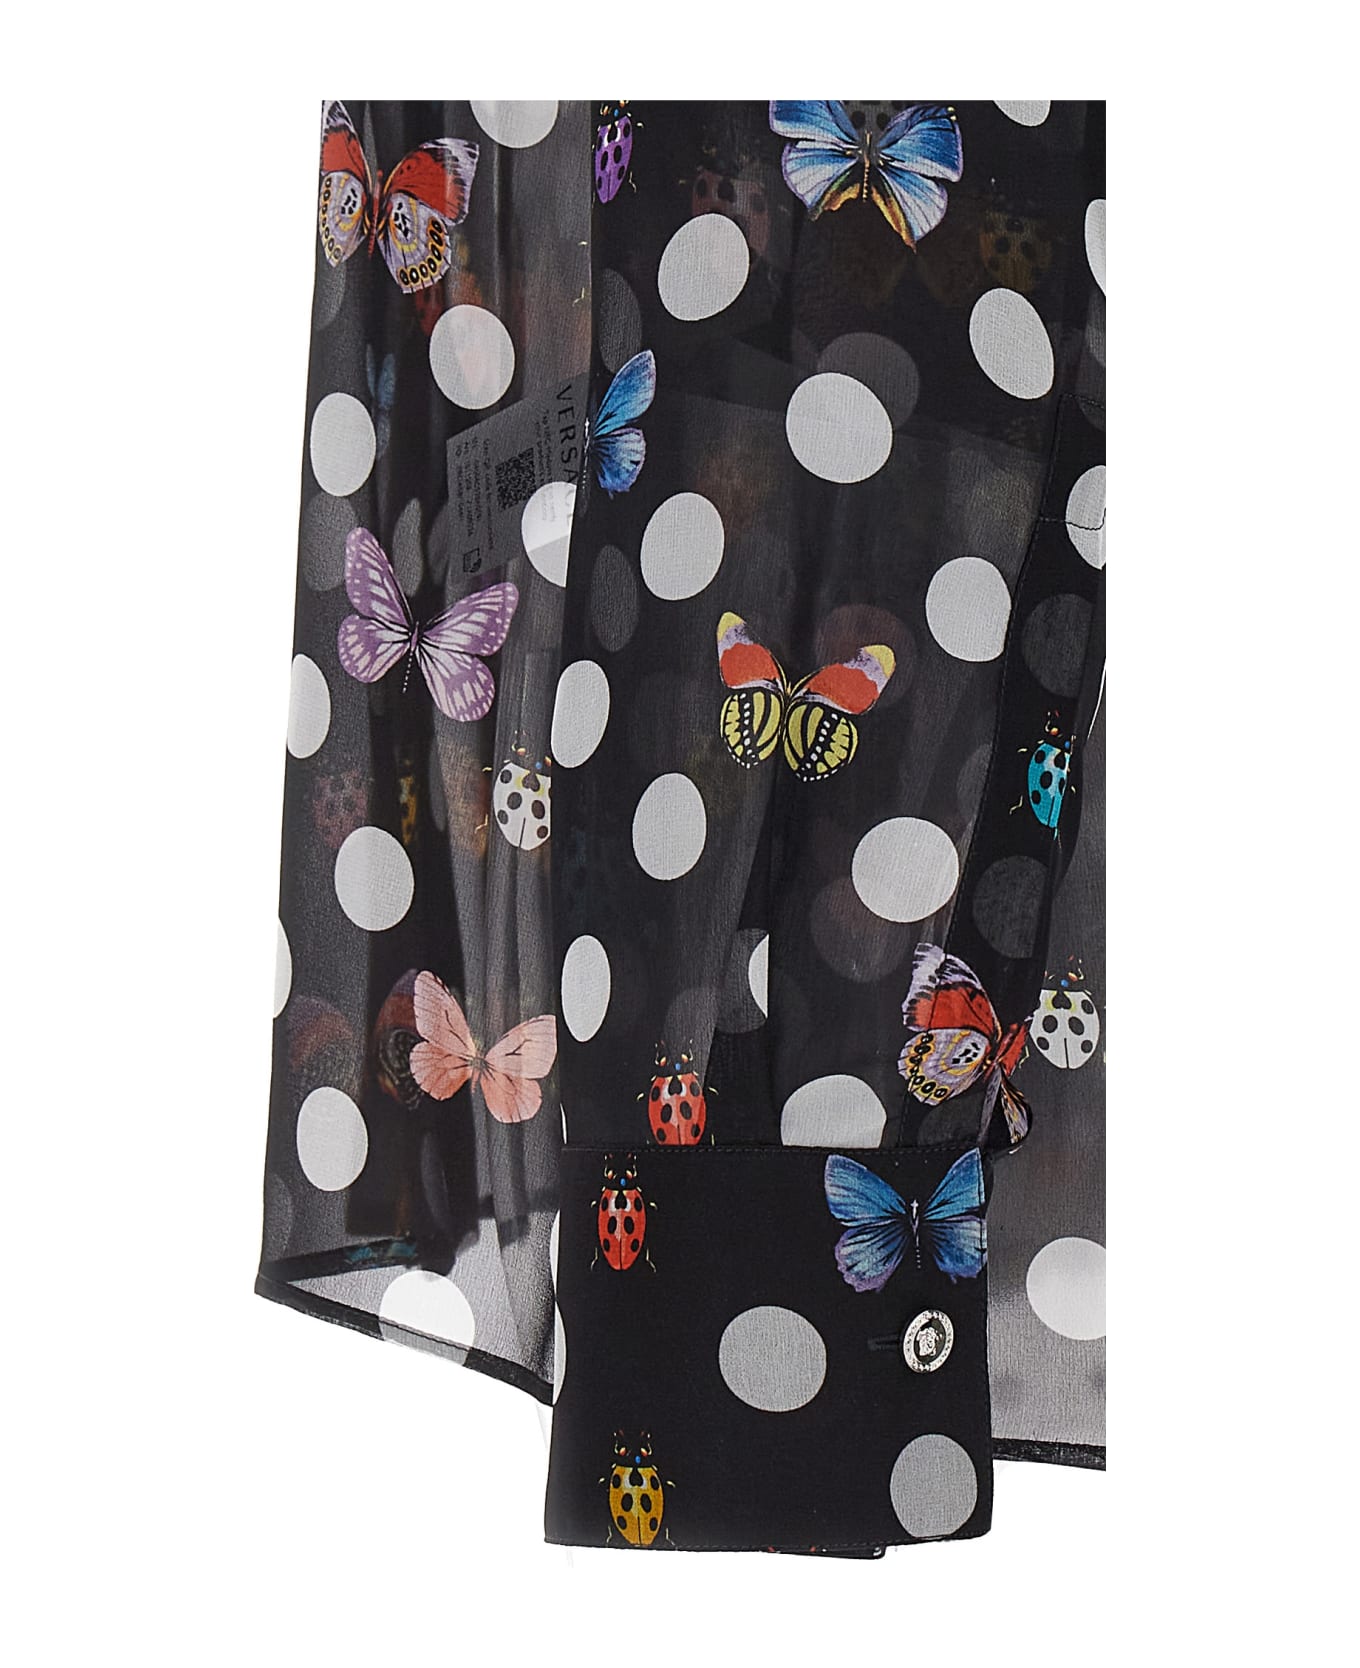 Versace Butterfly And Polka Dot Print Shirt - Black